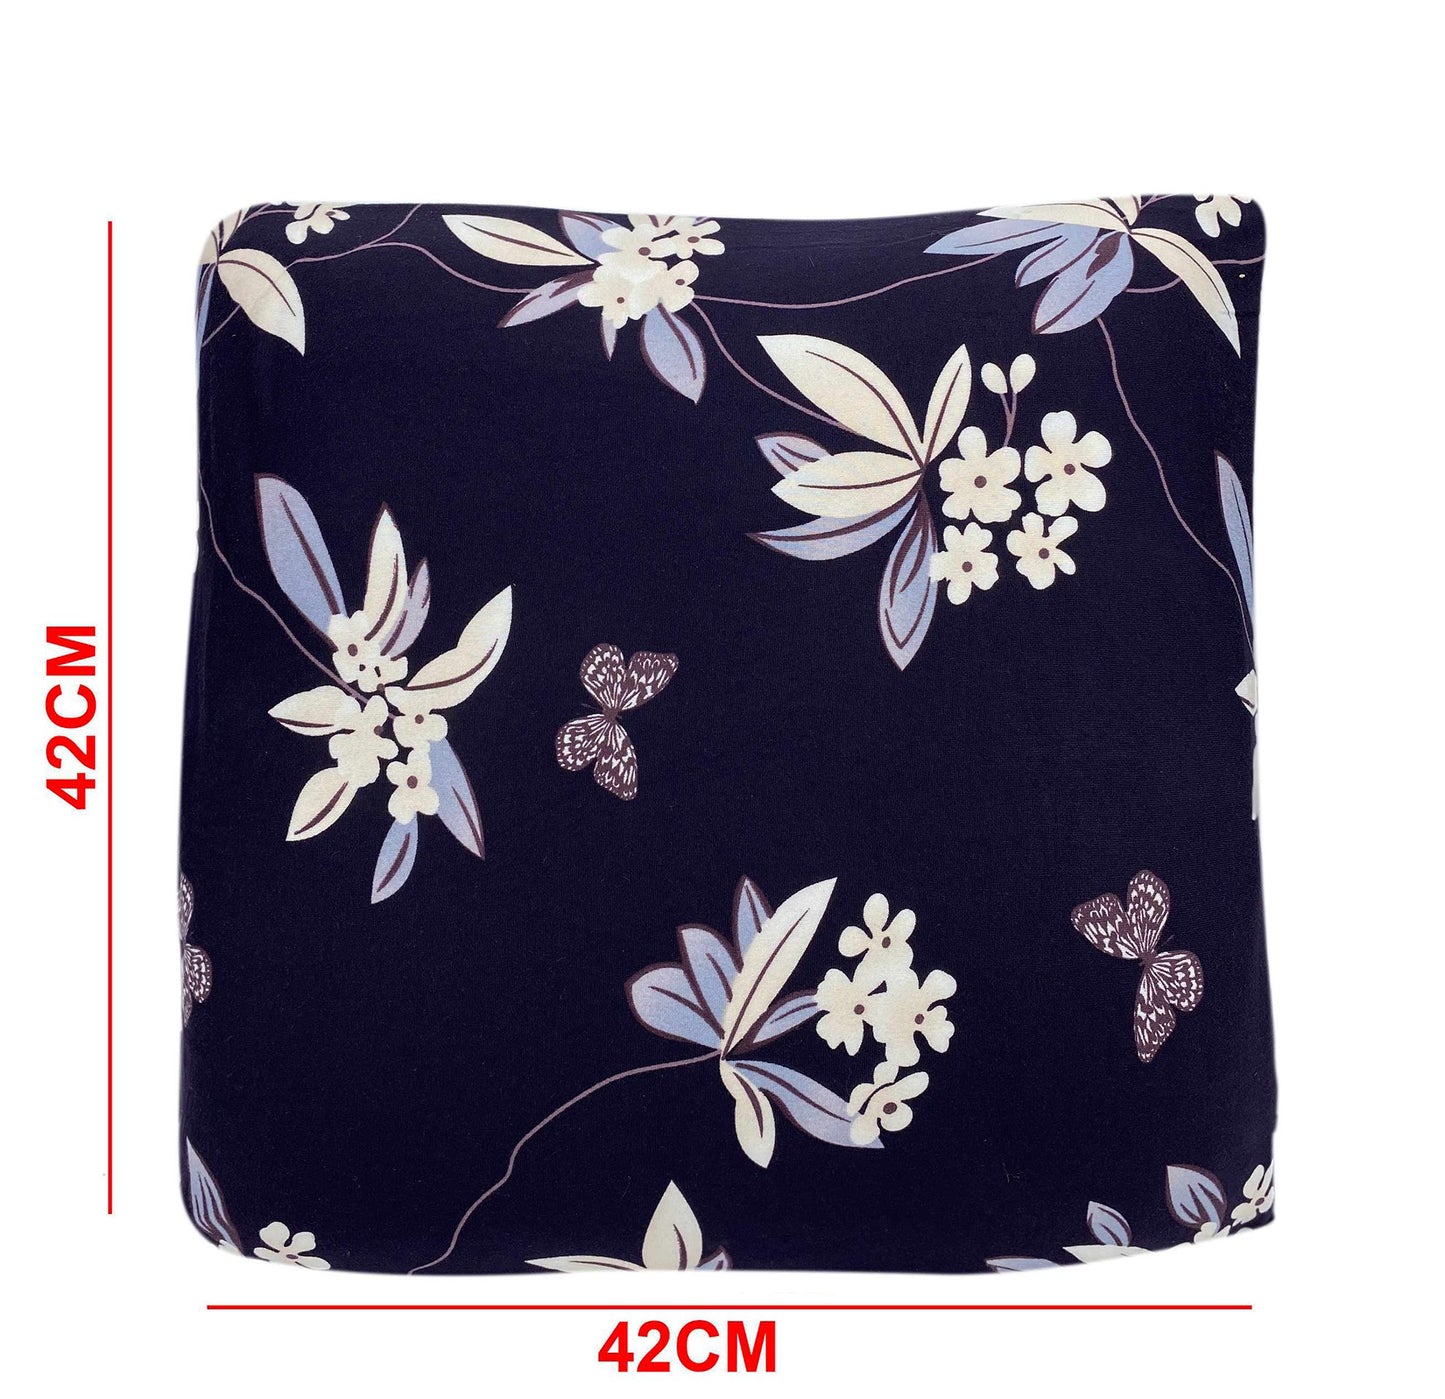 Printed Sofa Cover - Black Flower